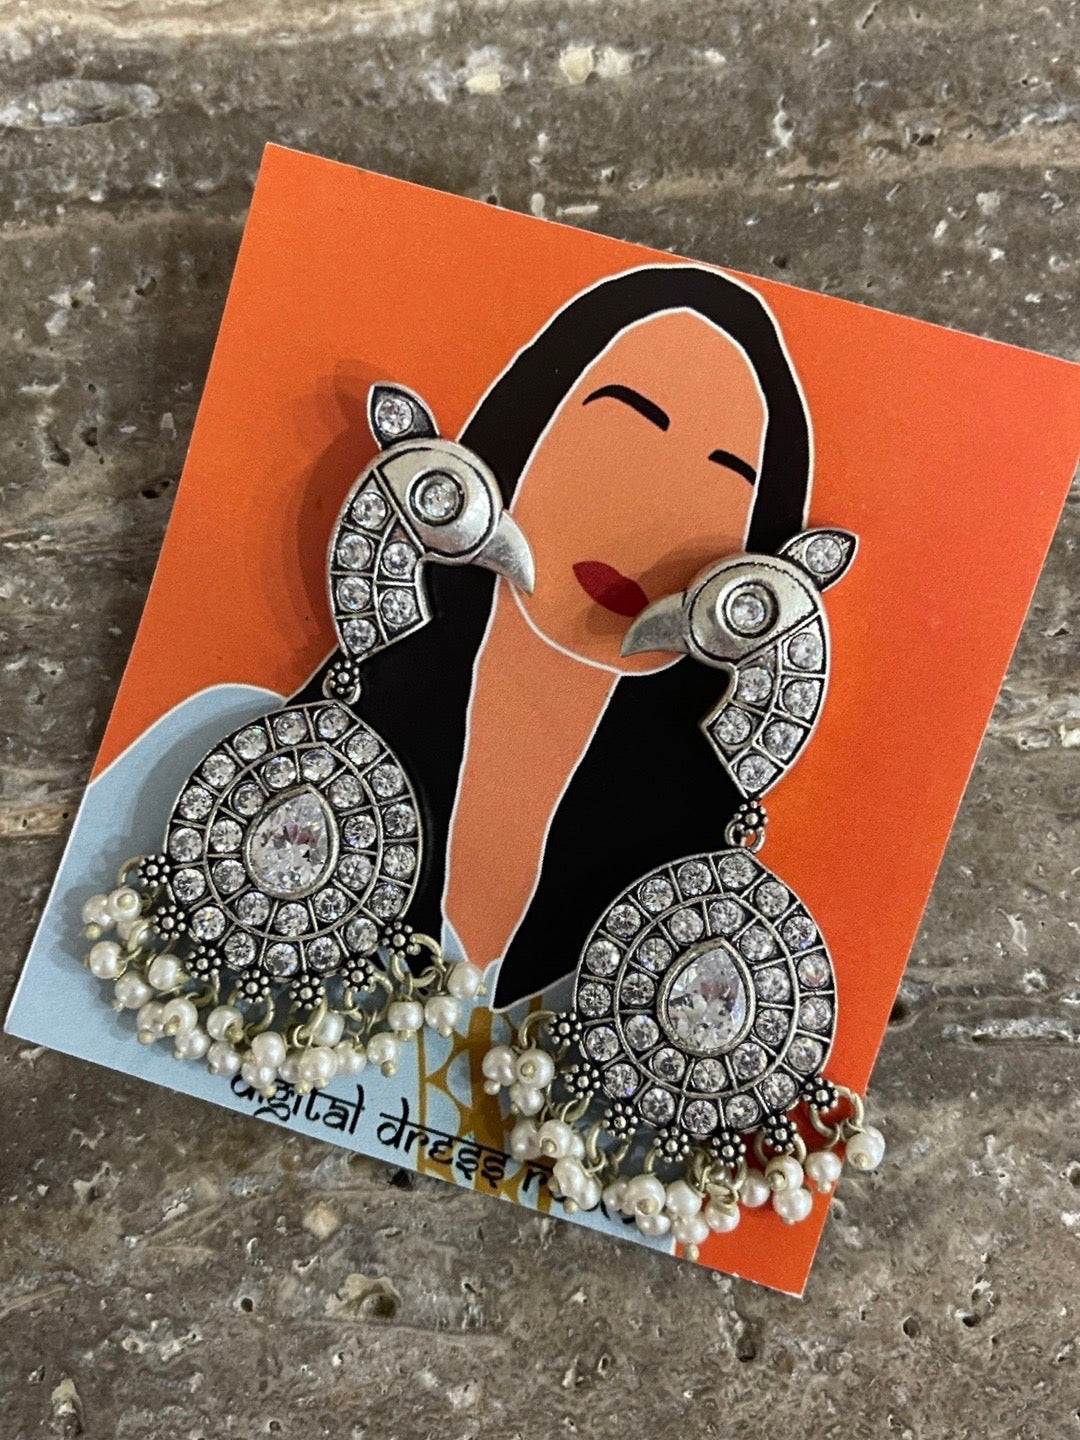 image for German Oxidized Silver Diamond Earrings for Women Bird Peacock Designs with Pearls Drop Earrings